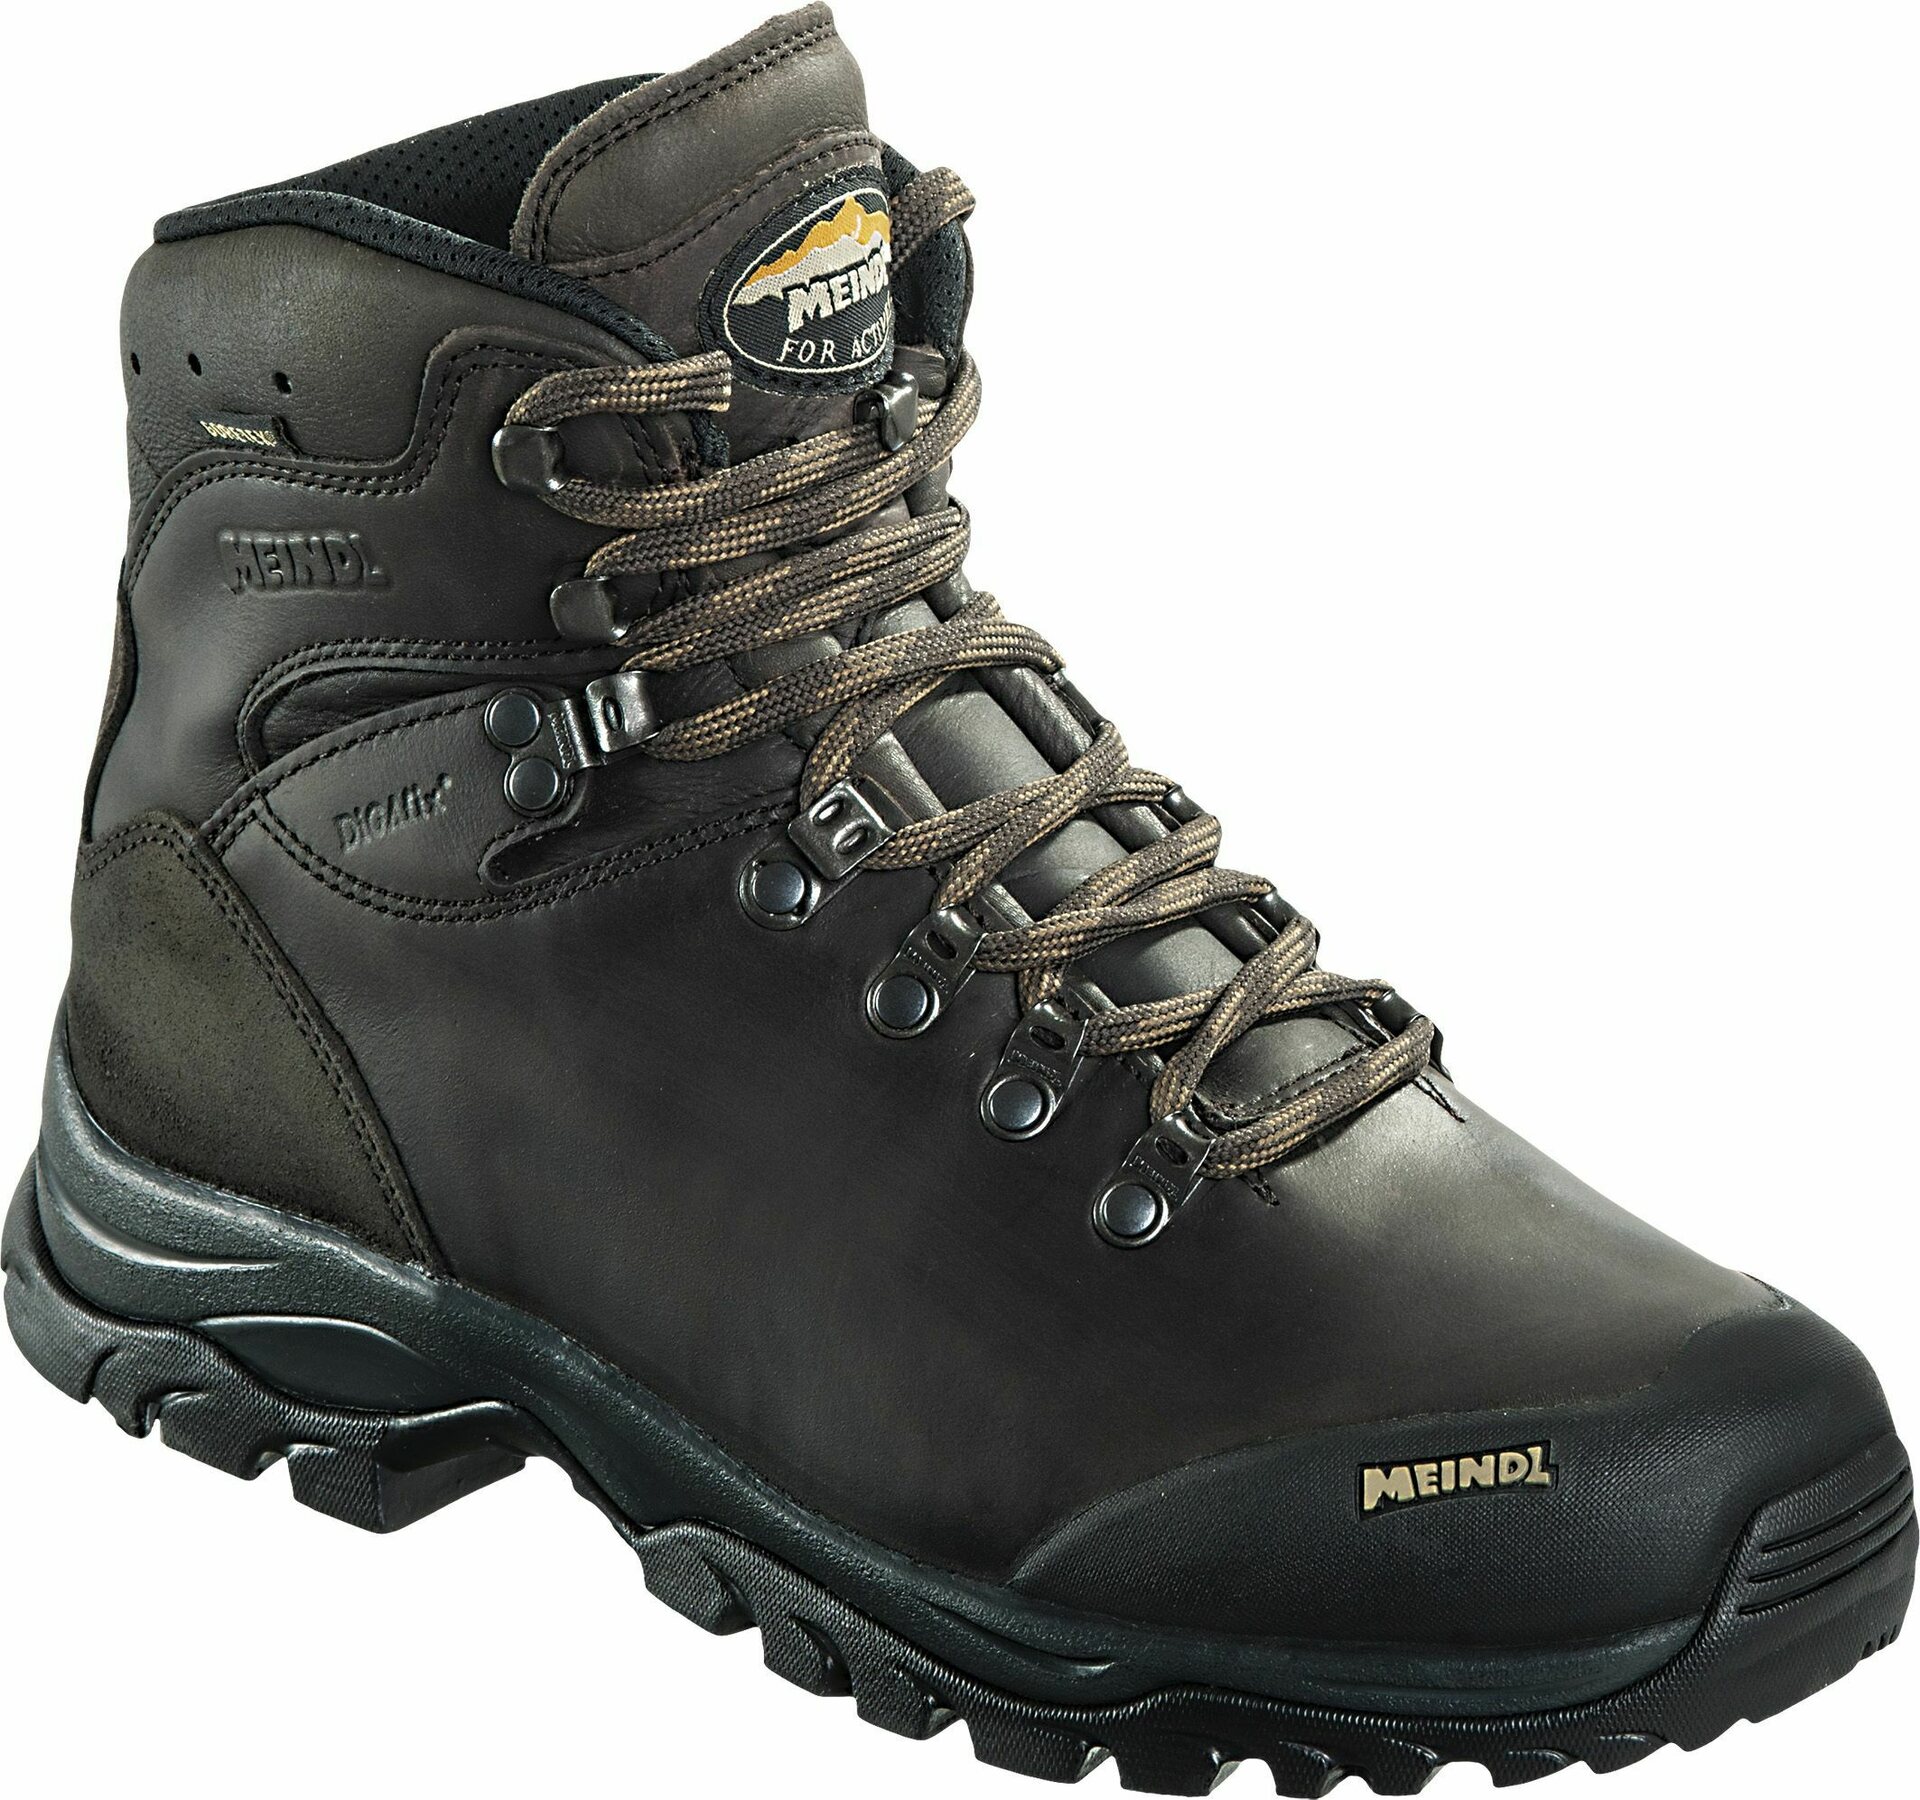 exotisch scheuren via Meindl Kansas GTX | Men's mid cut hiking boots with shell | Varuste.net  Nederlands